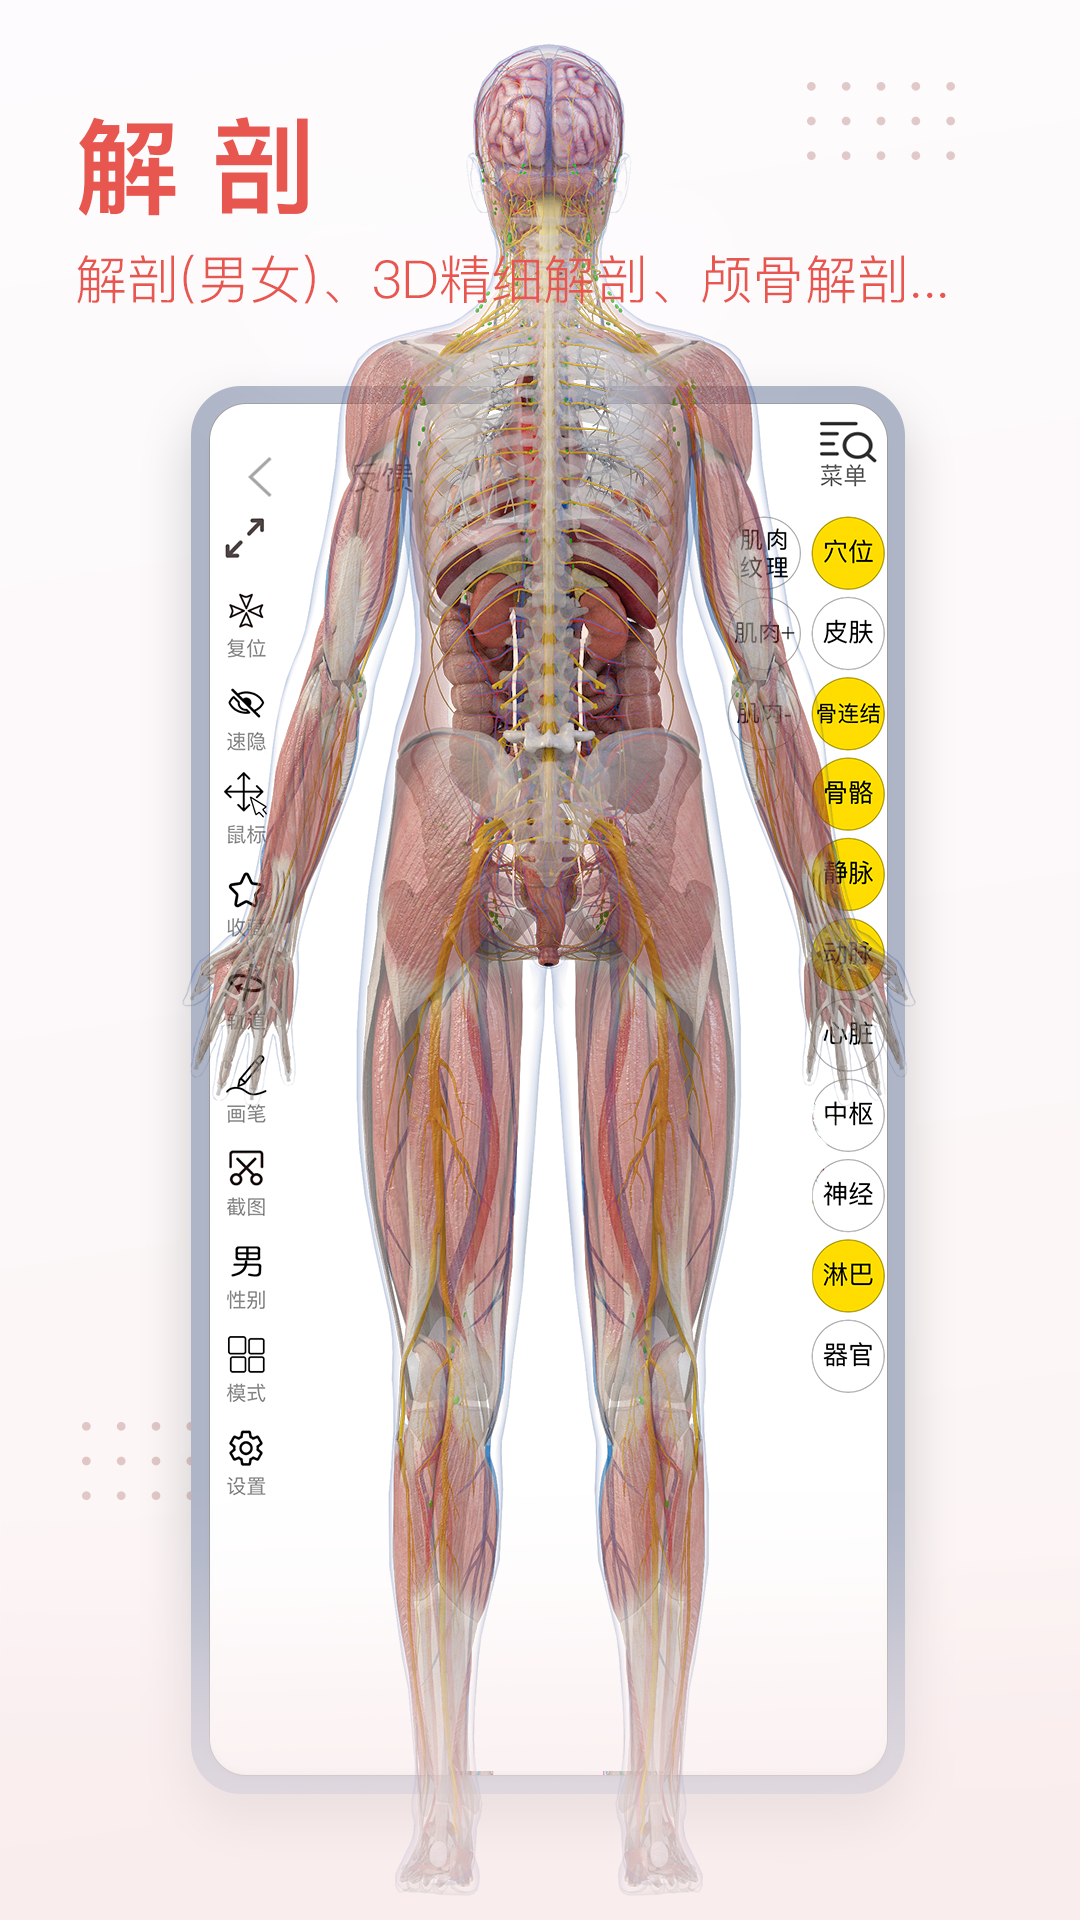 3DBody解剖v8.8.10截图5